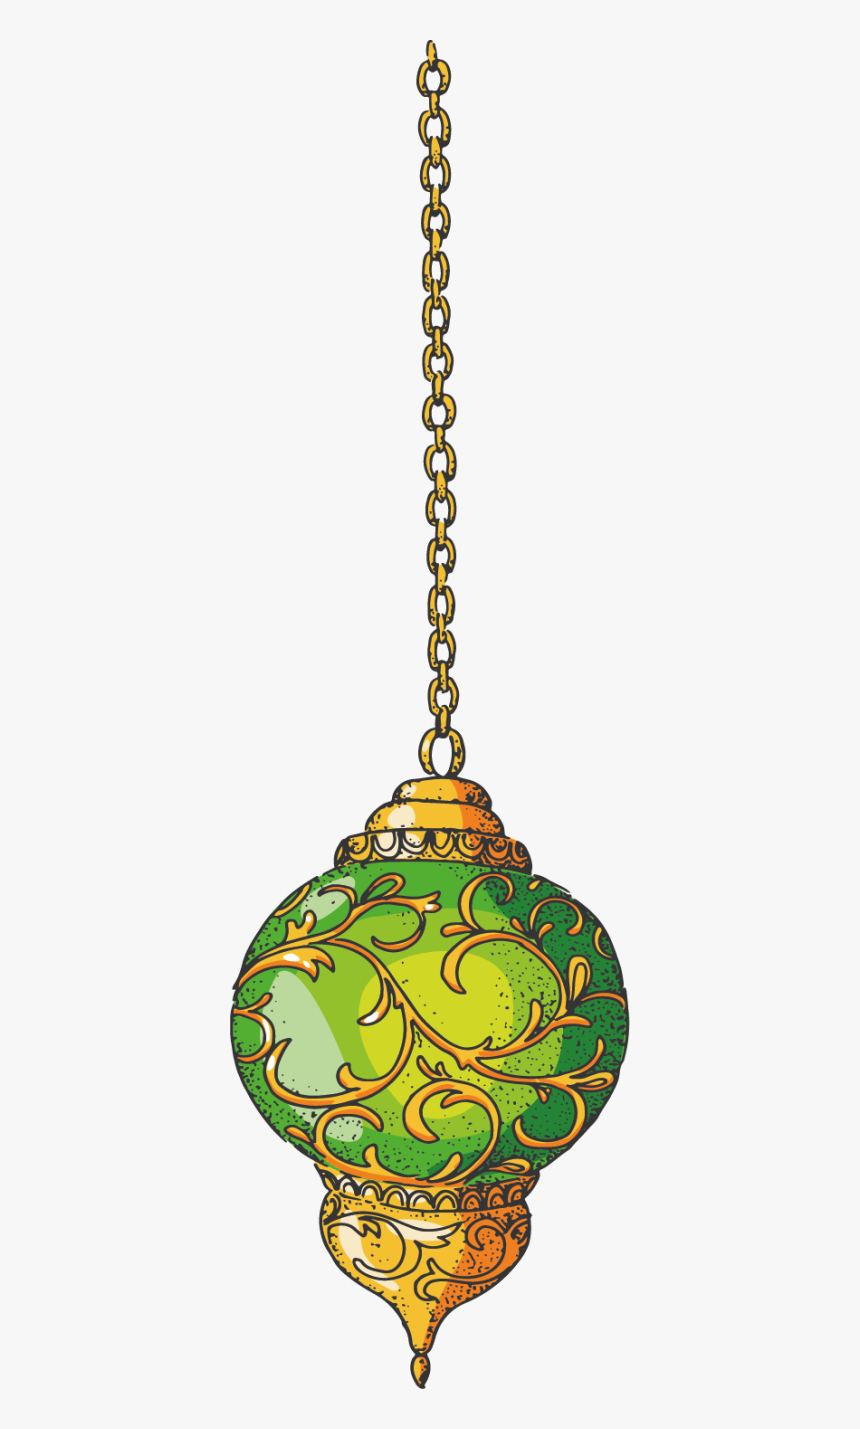 فوانيس رمضان للتصميم Hd Png Download Kindpng